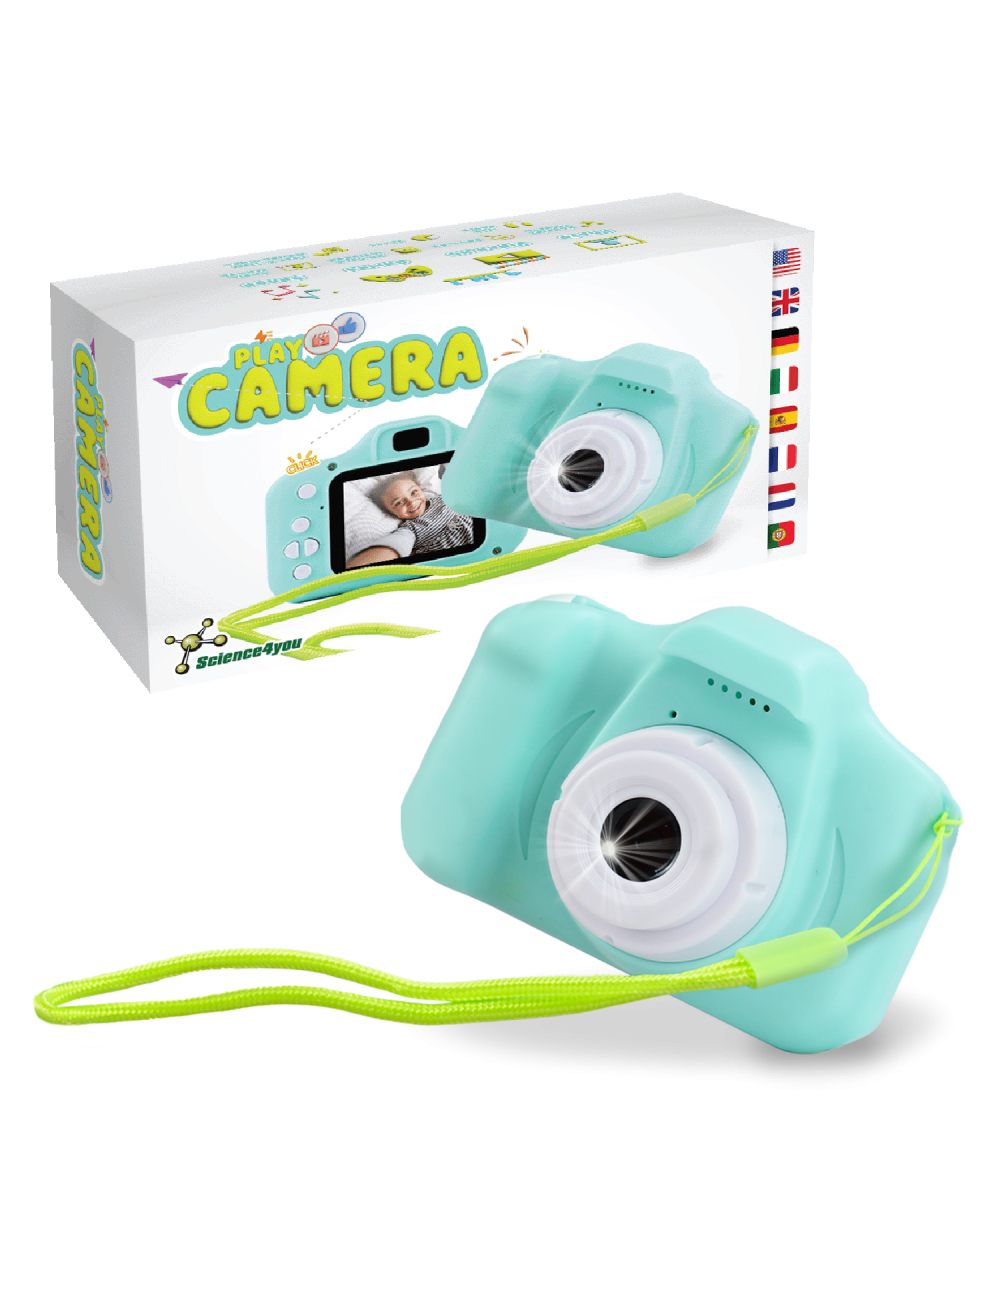 Mini Cámara Digital Infantil HD, Juguete para Niños